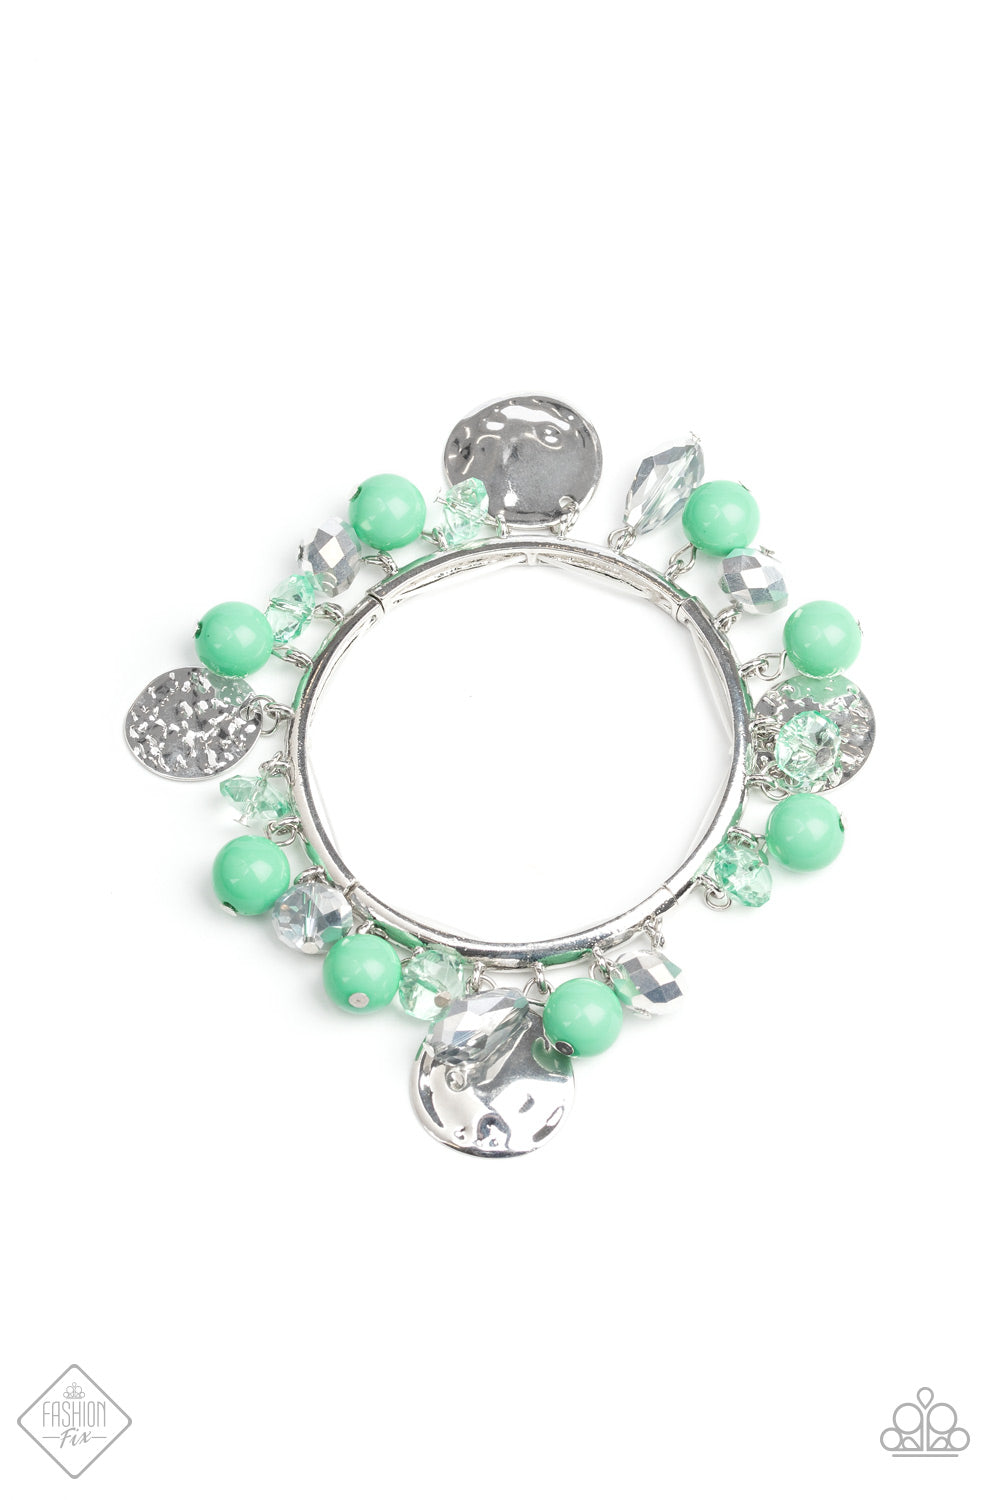 Paparazzi Accessories -  Charming Treasure - Green Fashion Fix Green Bracelet April 2020